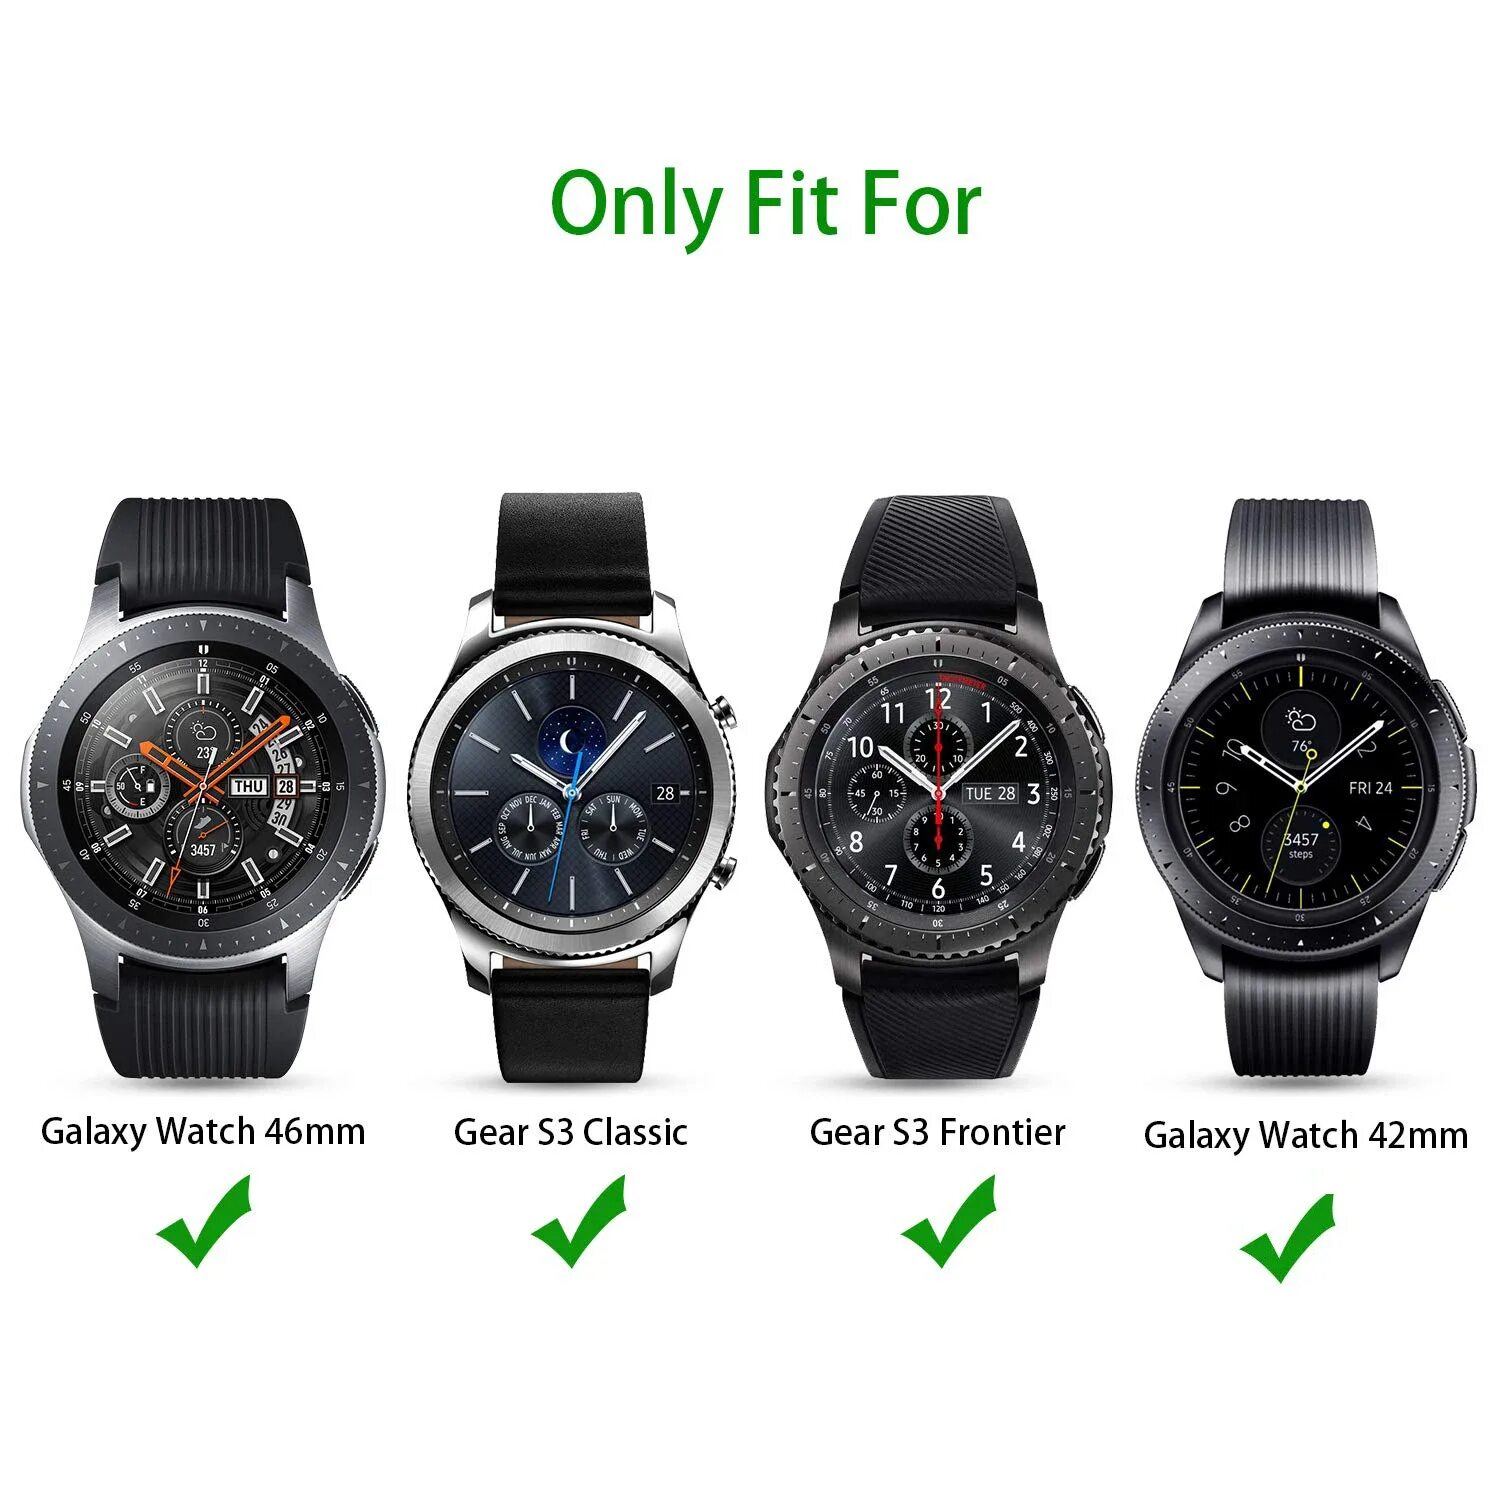 Samsung Galaxy watch Gear s3 Classic. Samsung Galaxy watch 46mm vs Gear s3. Samsung Galaxy watch 42мм. Samsung Galaxy watch 46mm.